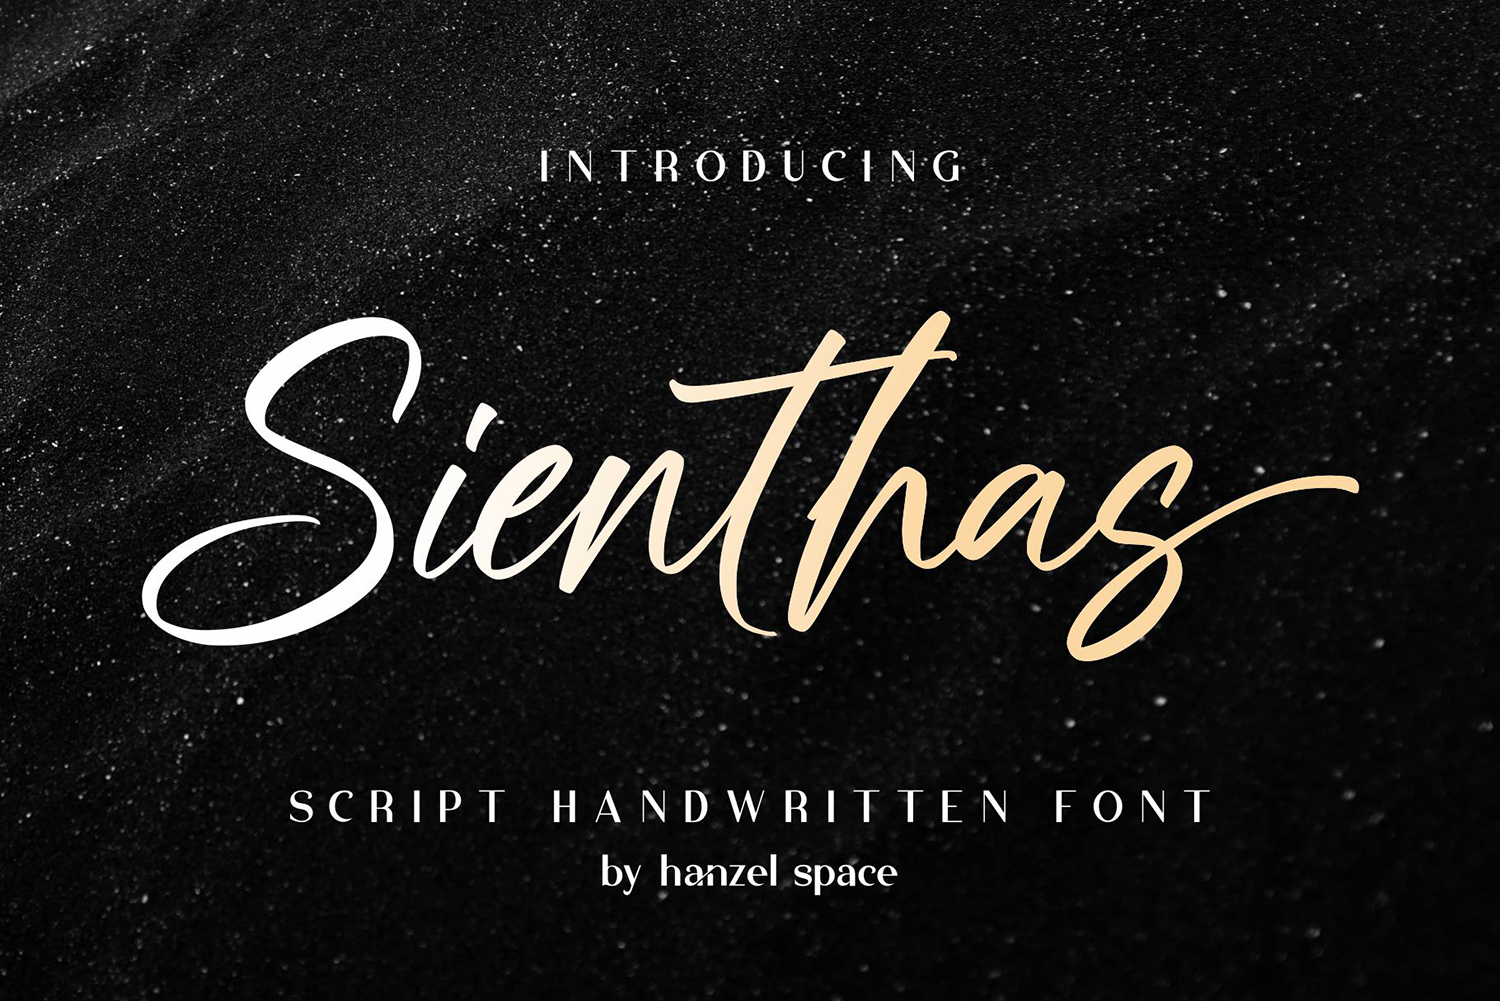 Sienthas Free Font